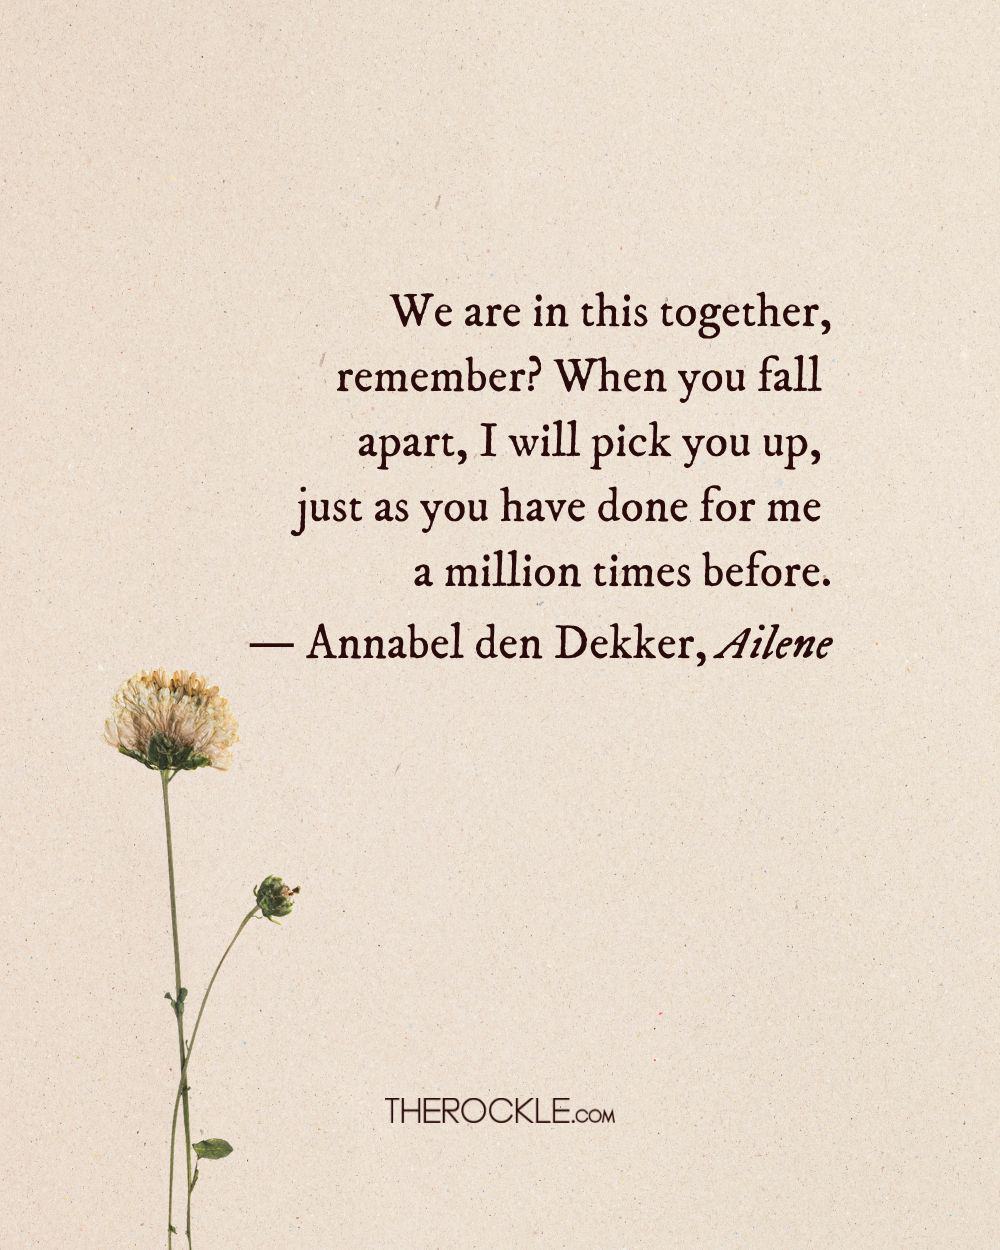 Annabel den Dekker on friendship and support